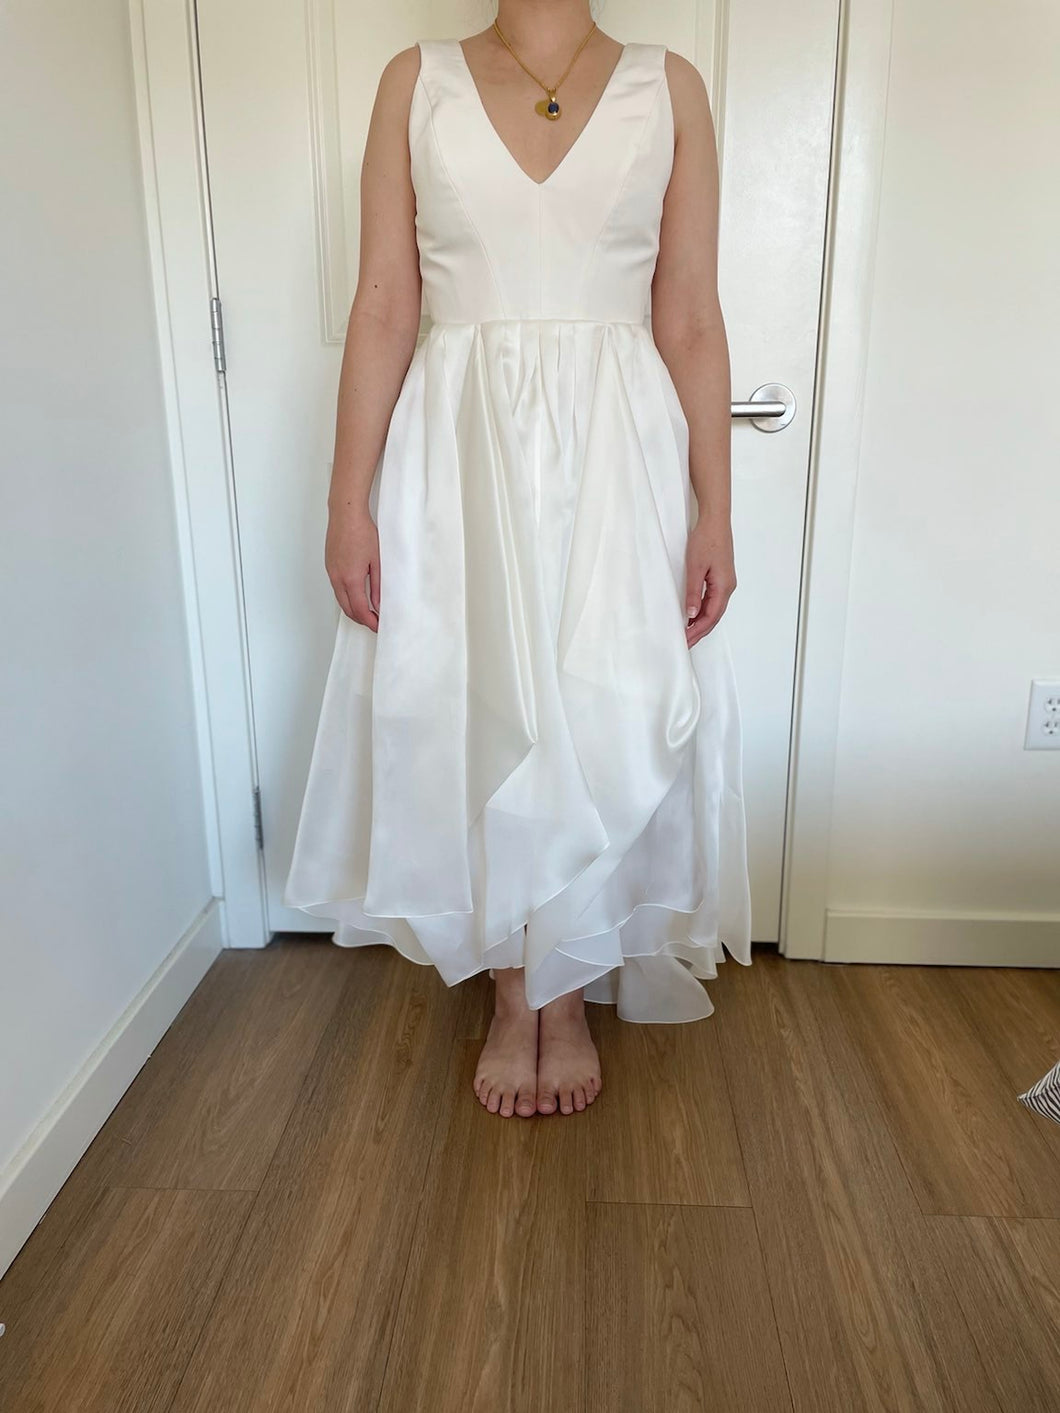 CAROL HANNAH 'Nolita' wedding dress size-08 NEW